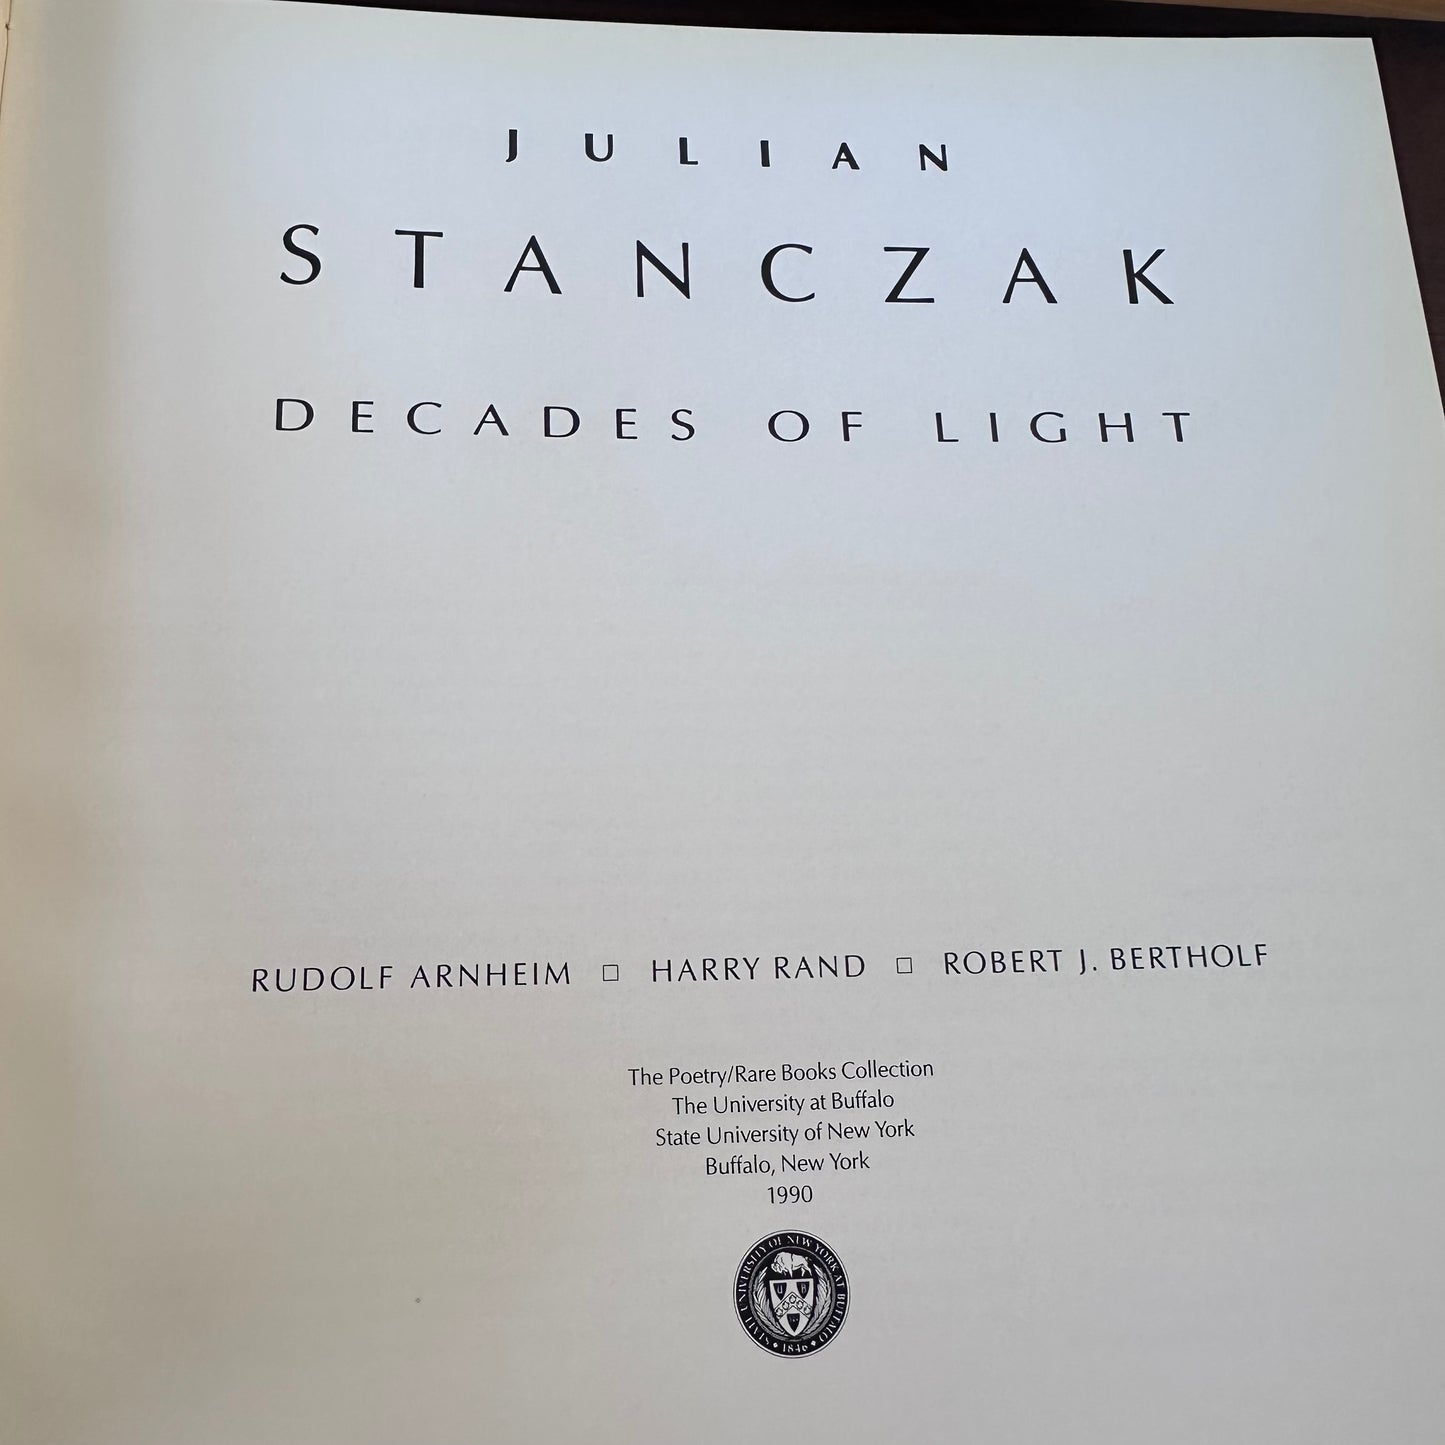 JULIAN STANCZAK EXHIBITION ORIGINAL FRAMED PRINT AND HARD COPY BOOK